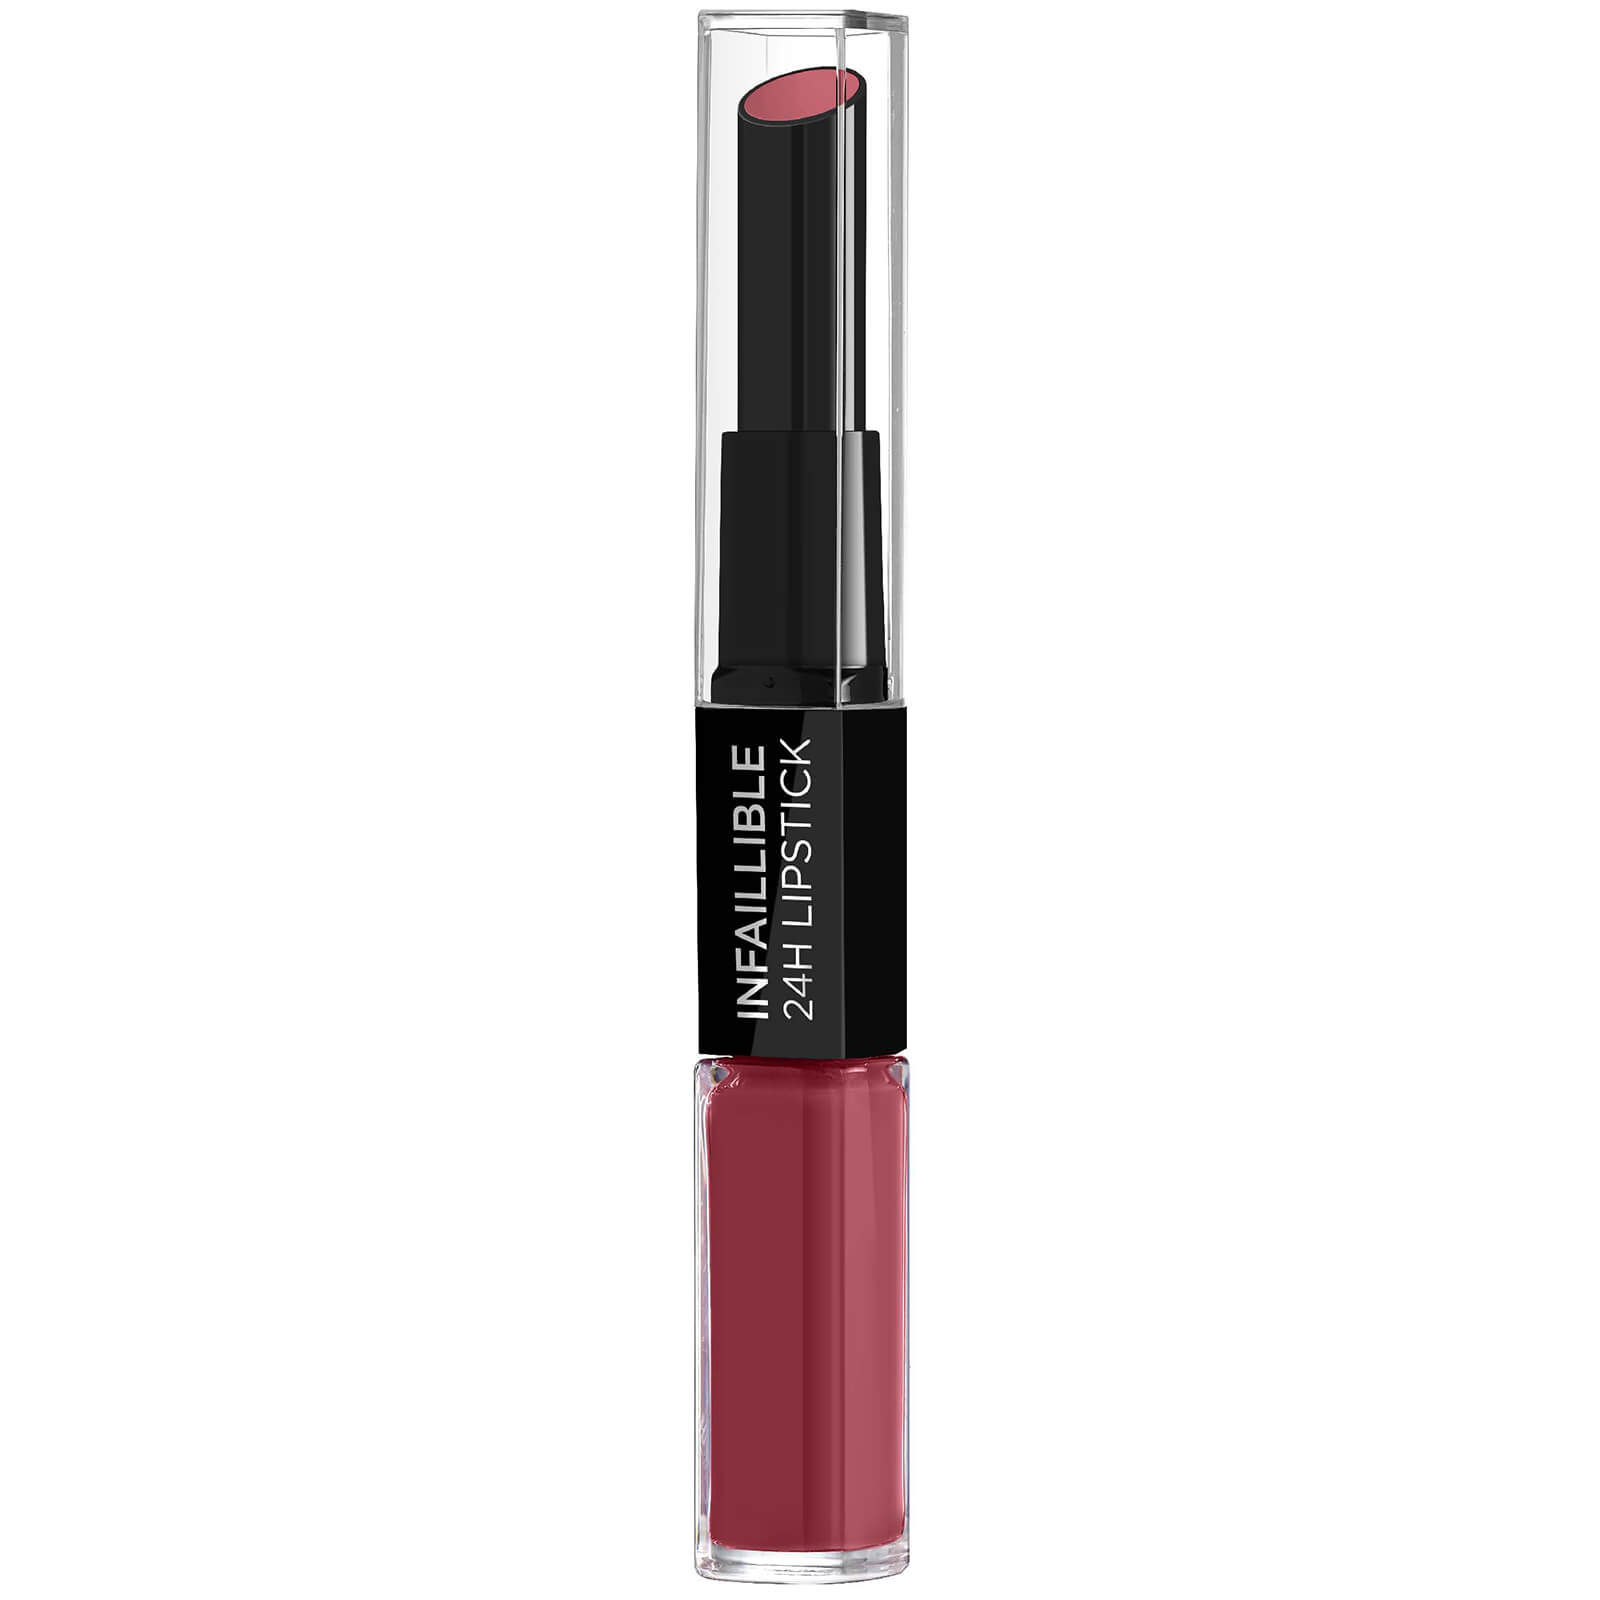 l'oreal paris infallible longwear 2 step lipstick 6ml (various shades) - 804 metro proof rose